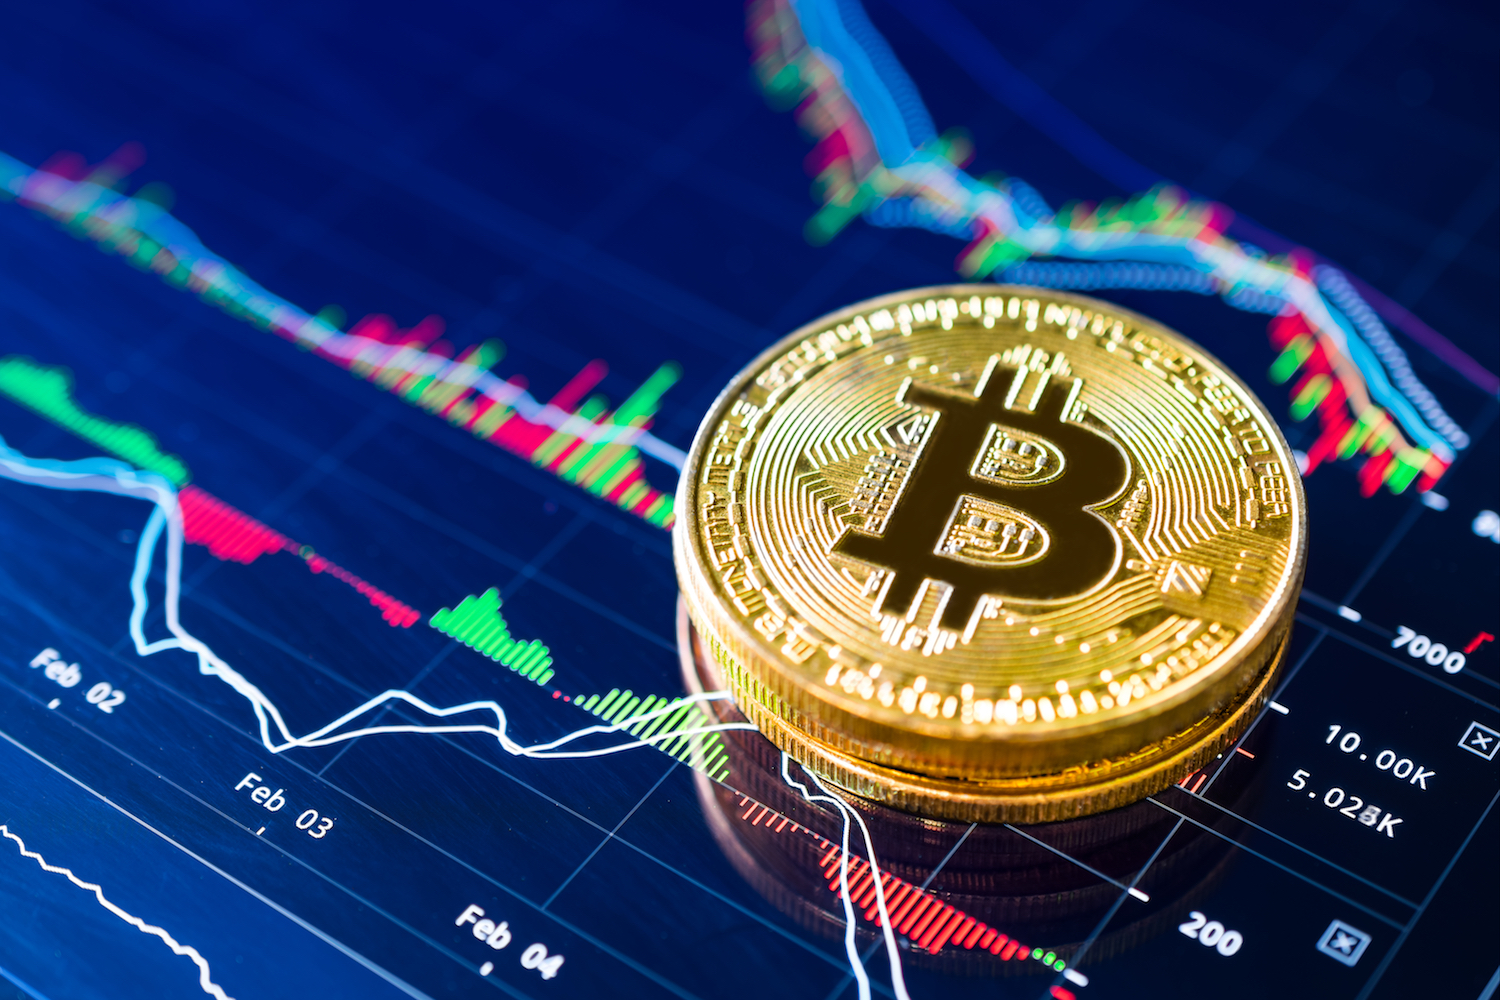 Bitcoin Seeking Gains After Retaking Key Price Support